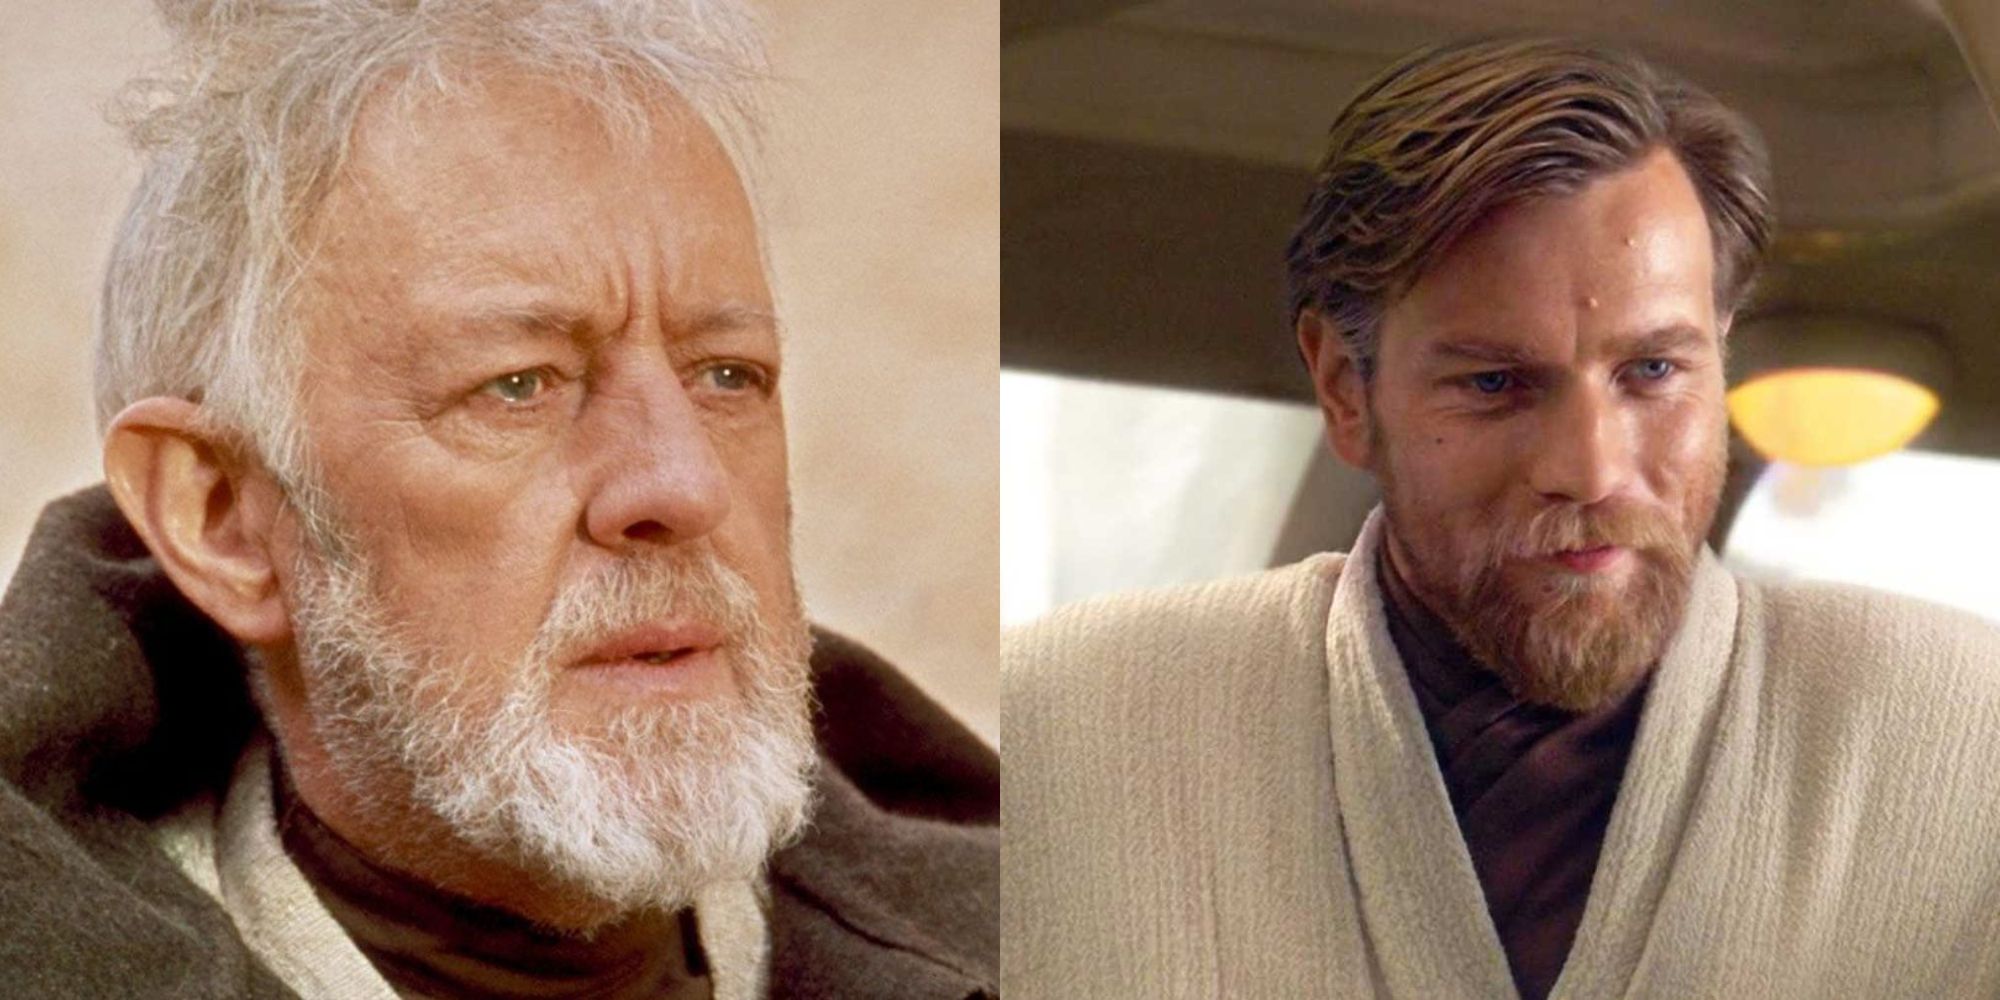 Split image showing Alec Guiness and Ewan McGregor as Obi Wan Kenobi.